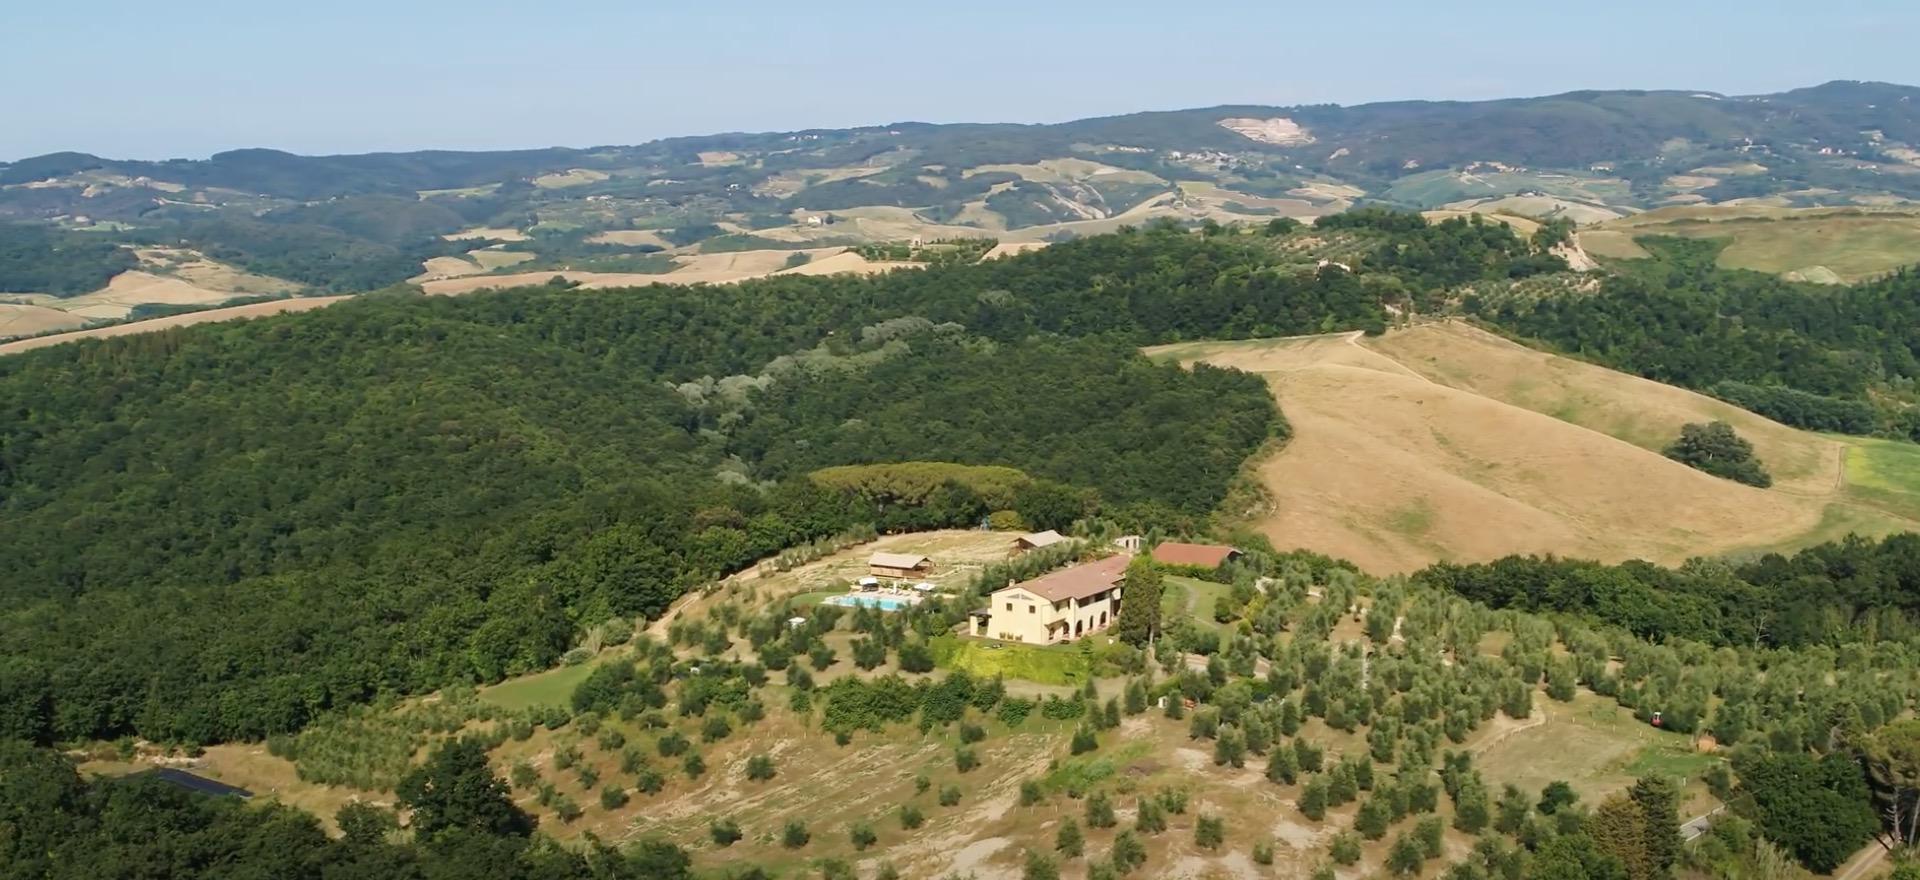 Agriturismo Toscana Agriturismo in zona tranquilla, Toscana, tra vigneti